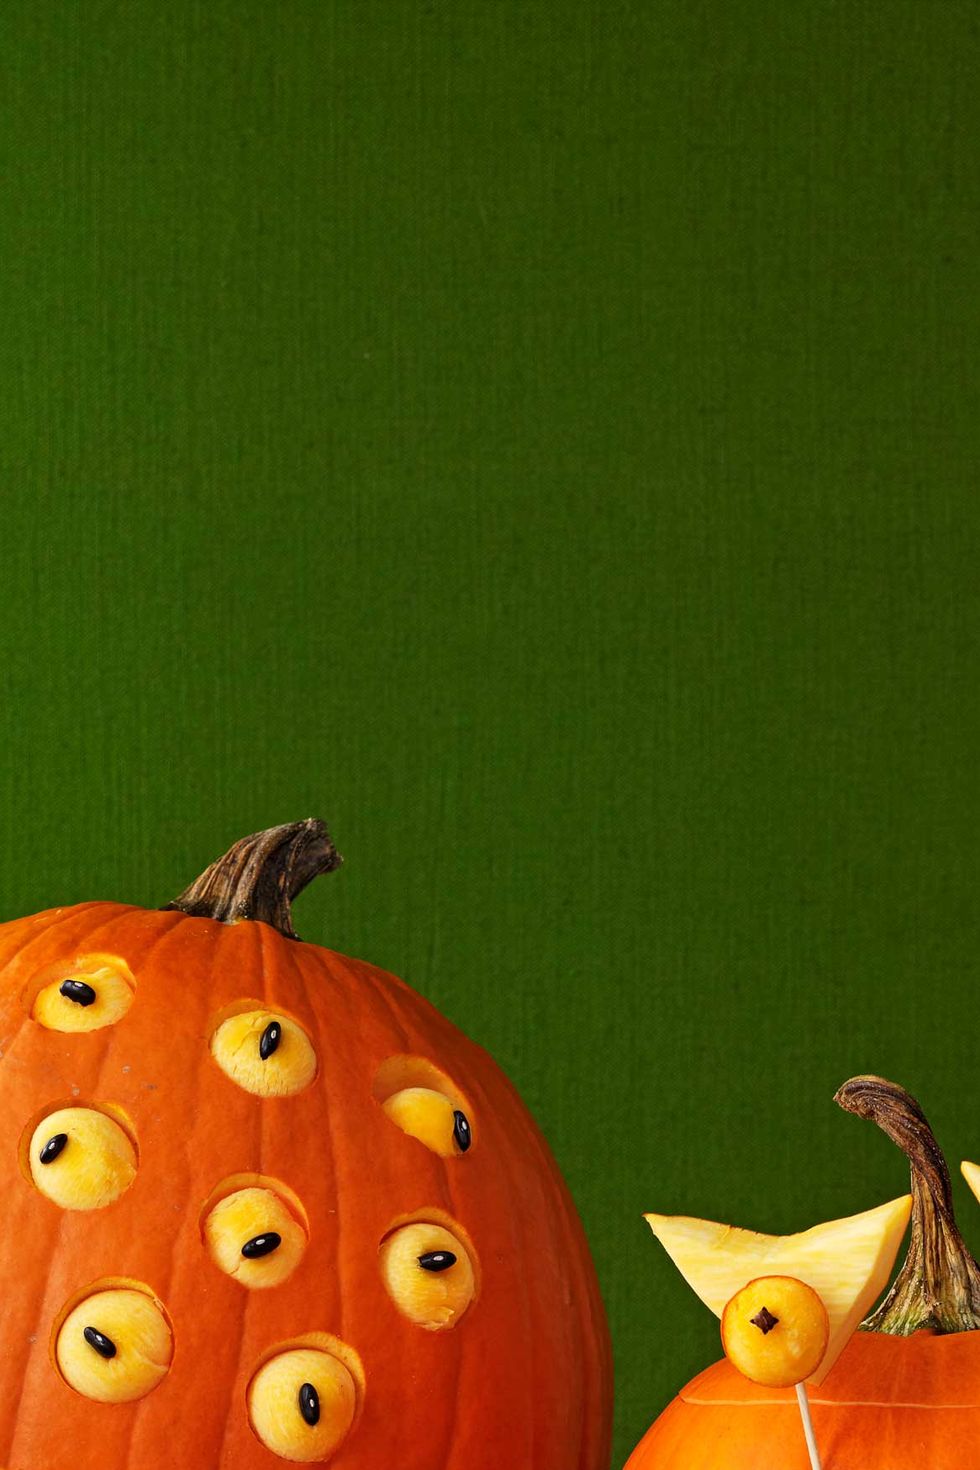 pumpkin carving ideas melon ball